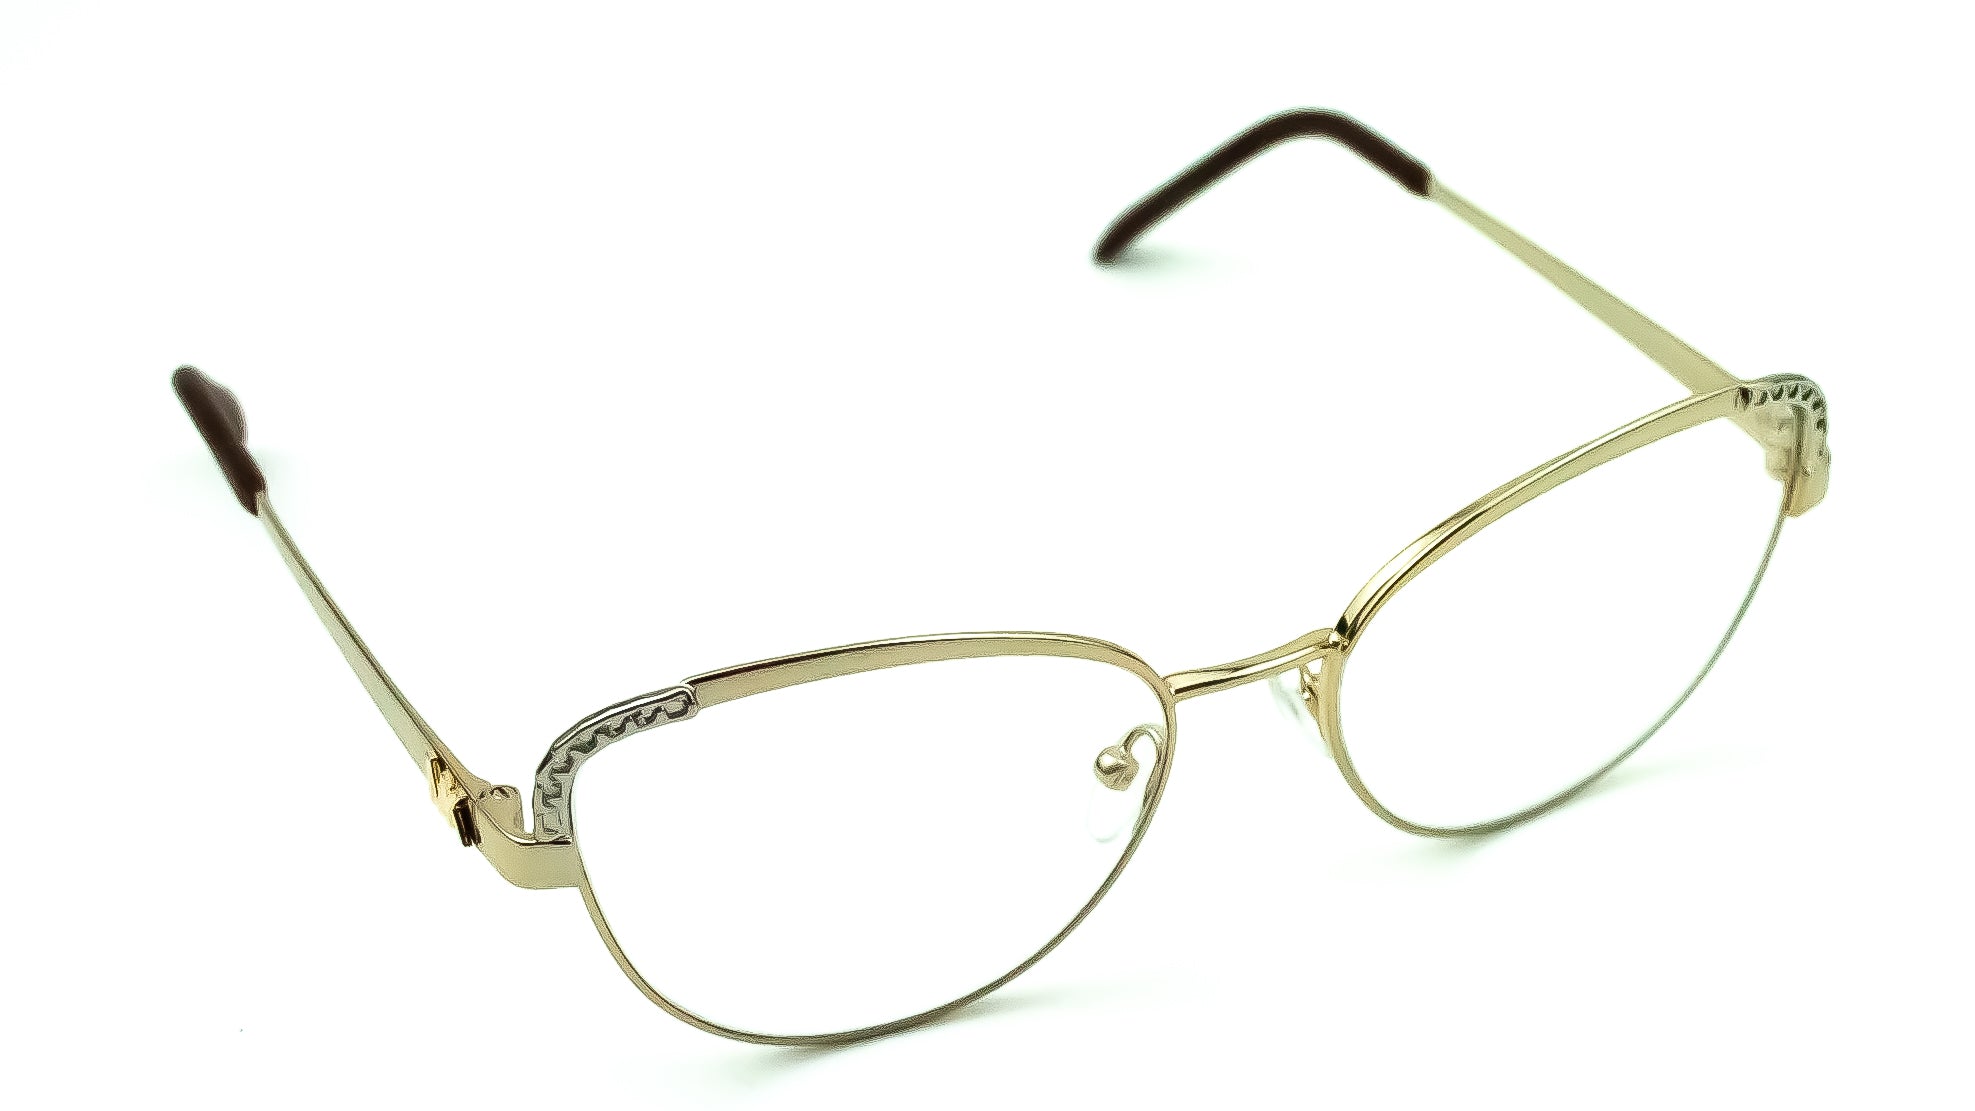 Michael Kors Andalusia Cat Eye Glasses Frames